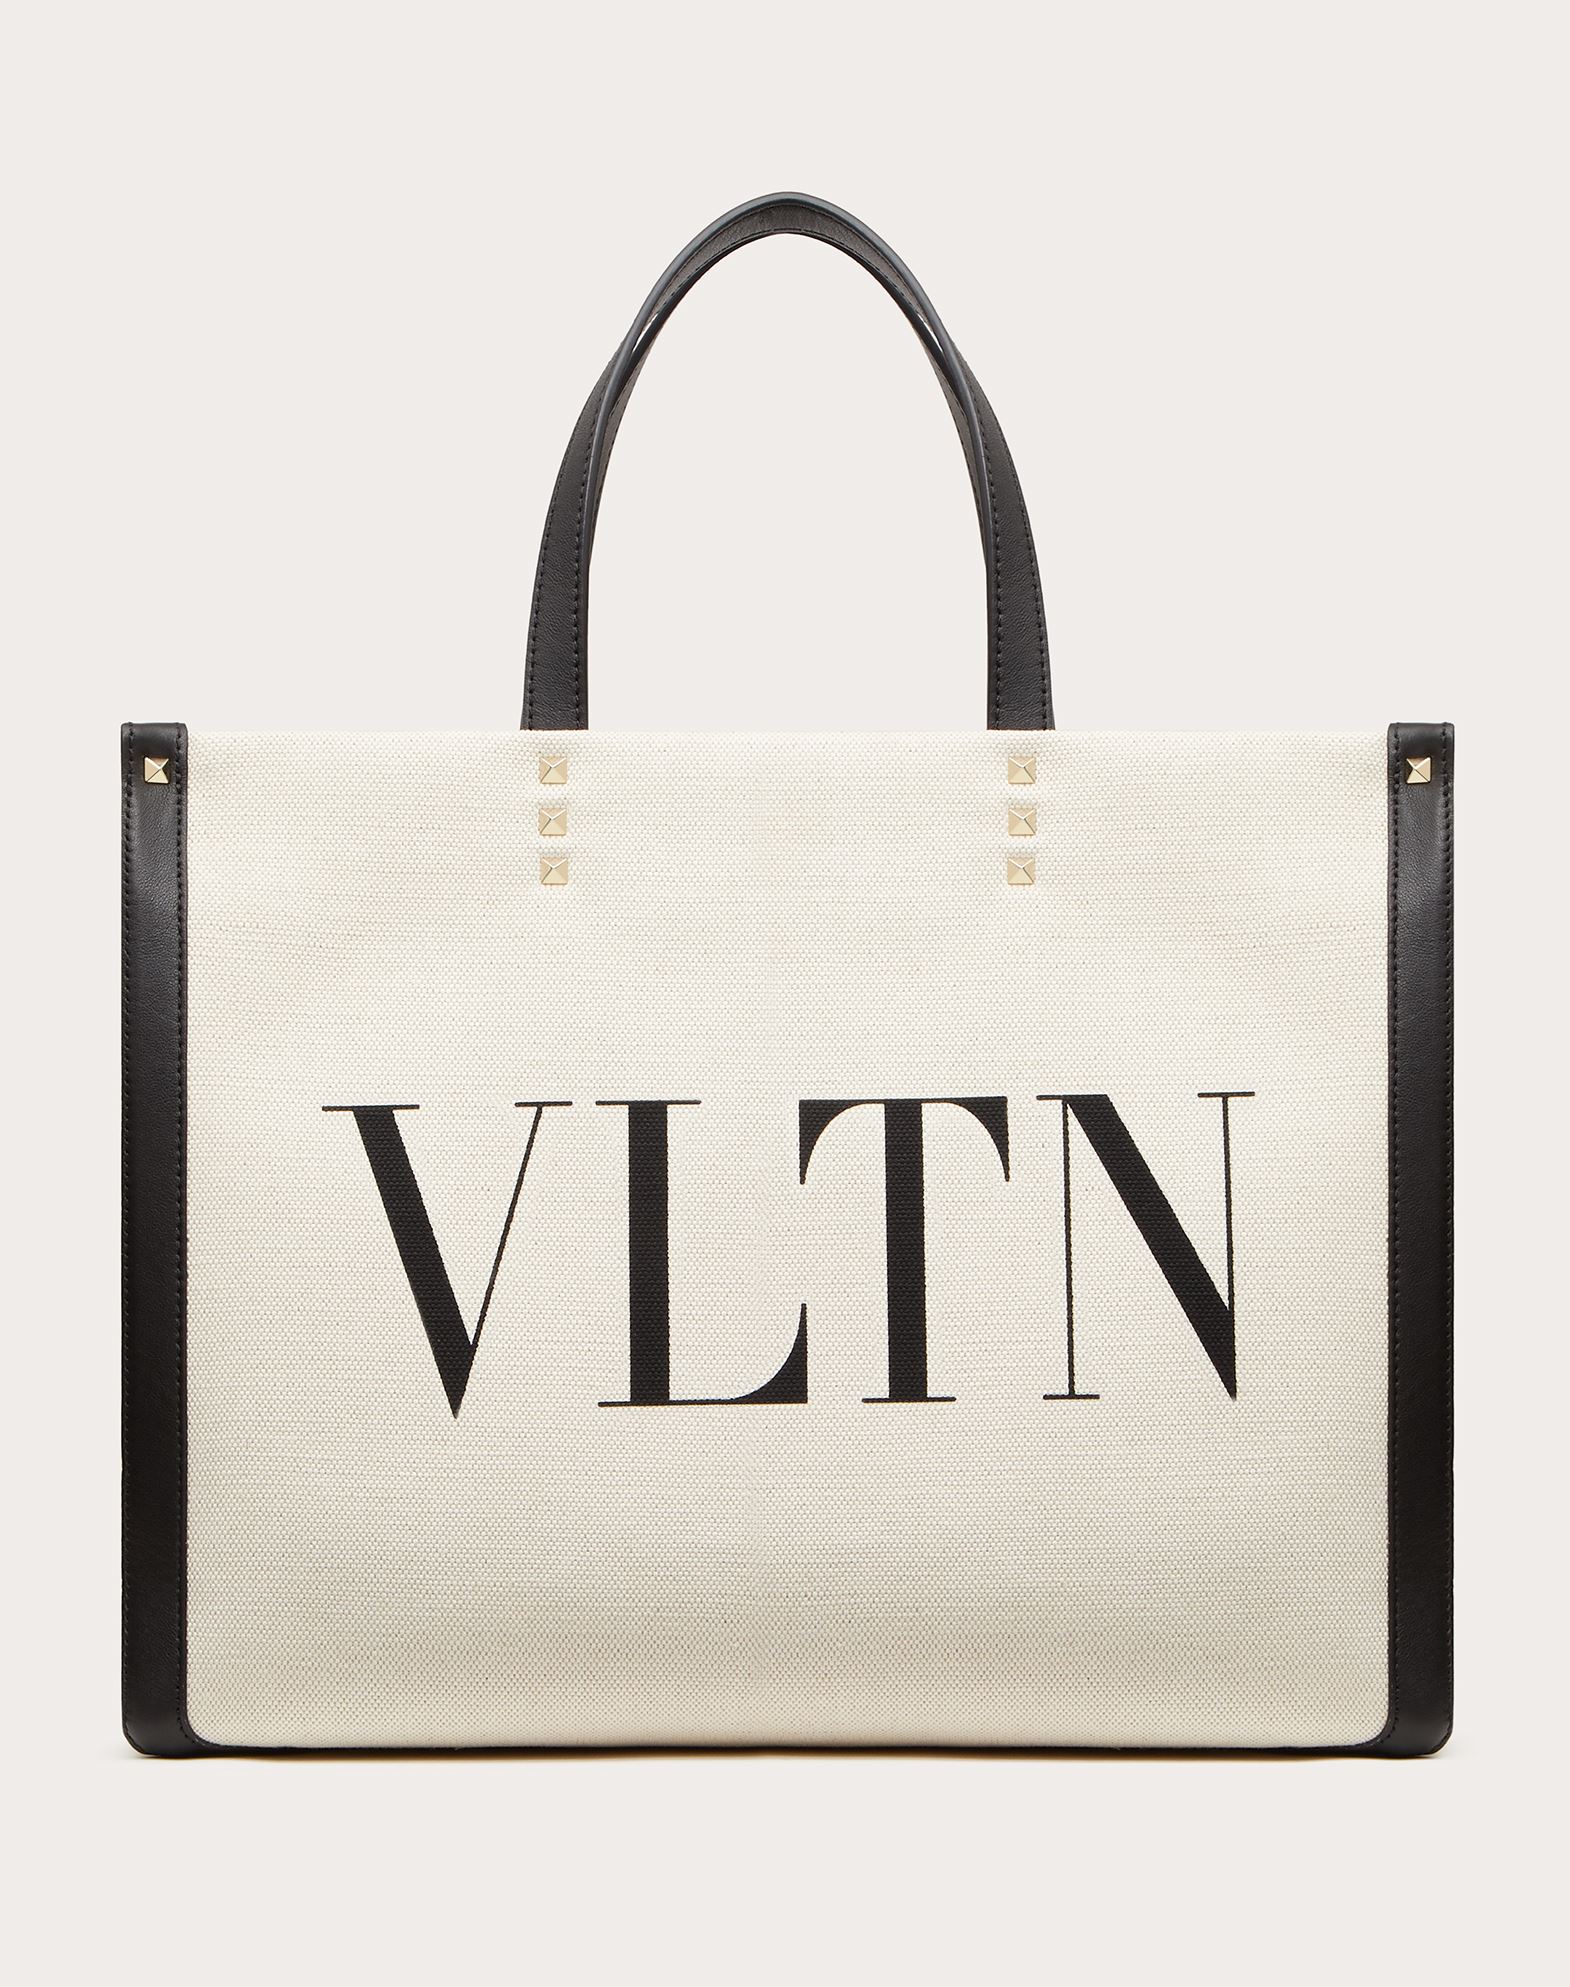 Valentino Bags Tote Top Sellers, 54% OFF | www.ingeniovirtual.com